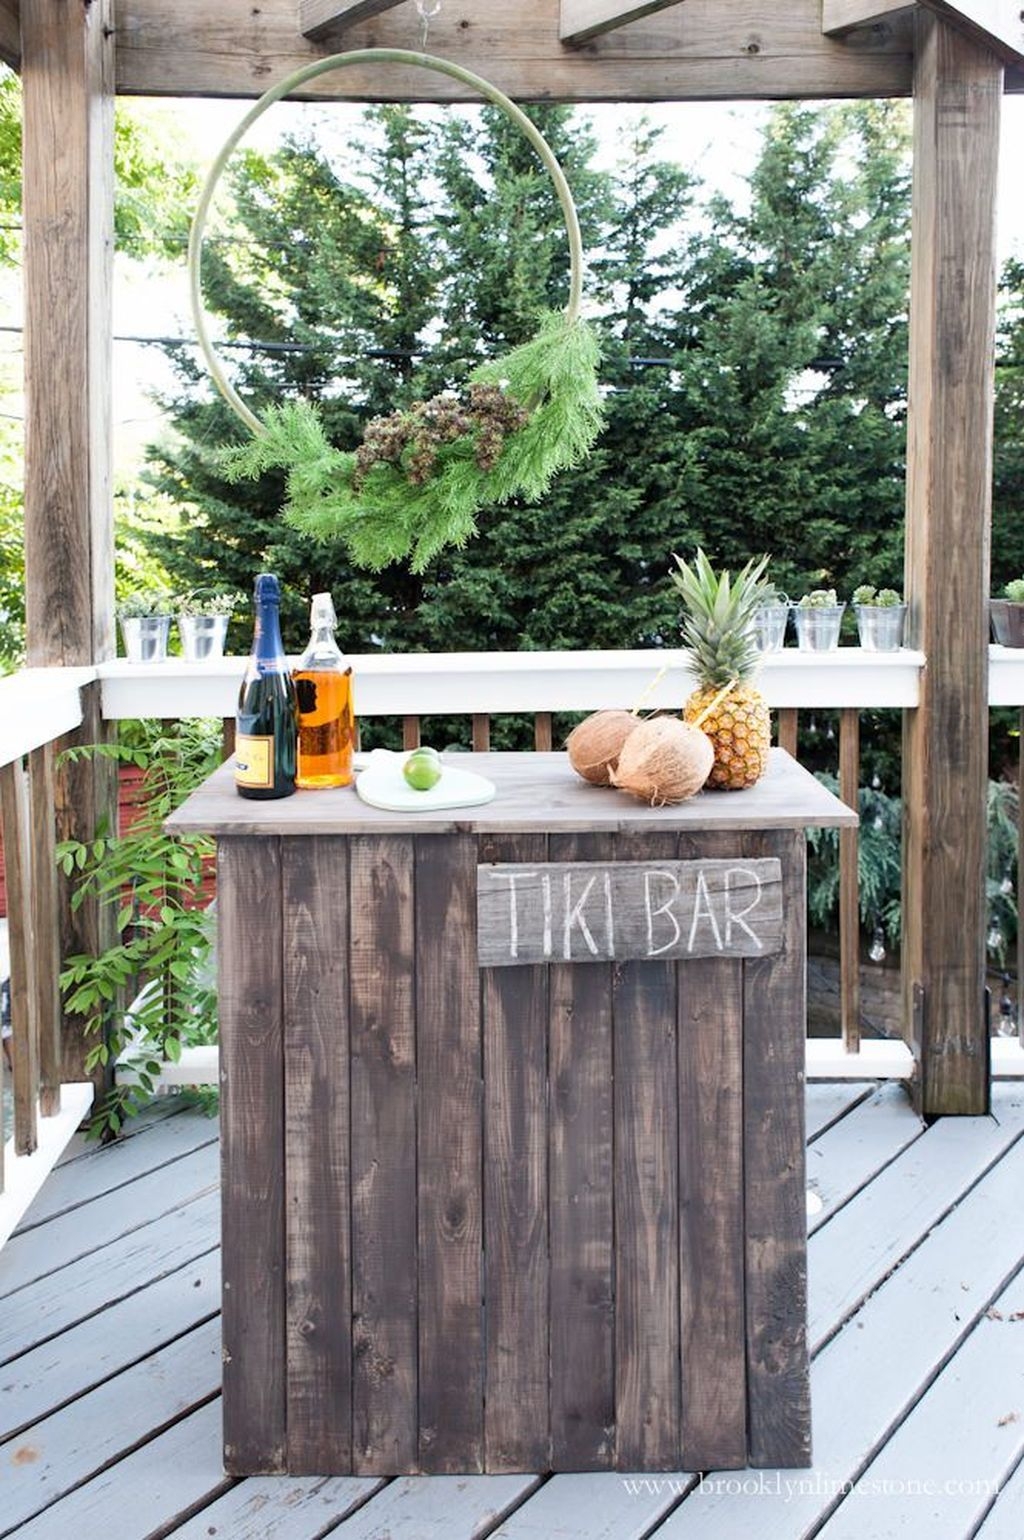 Unusual DIY Outdoor Bar Ideas On A Budget 41